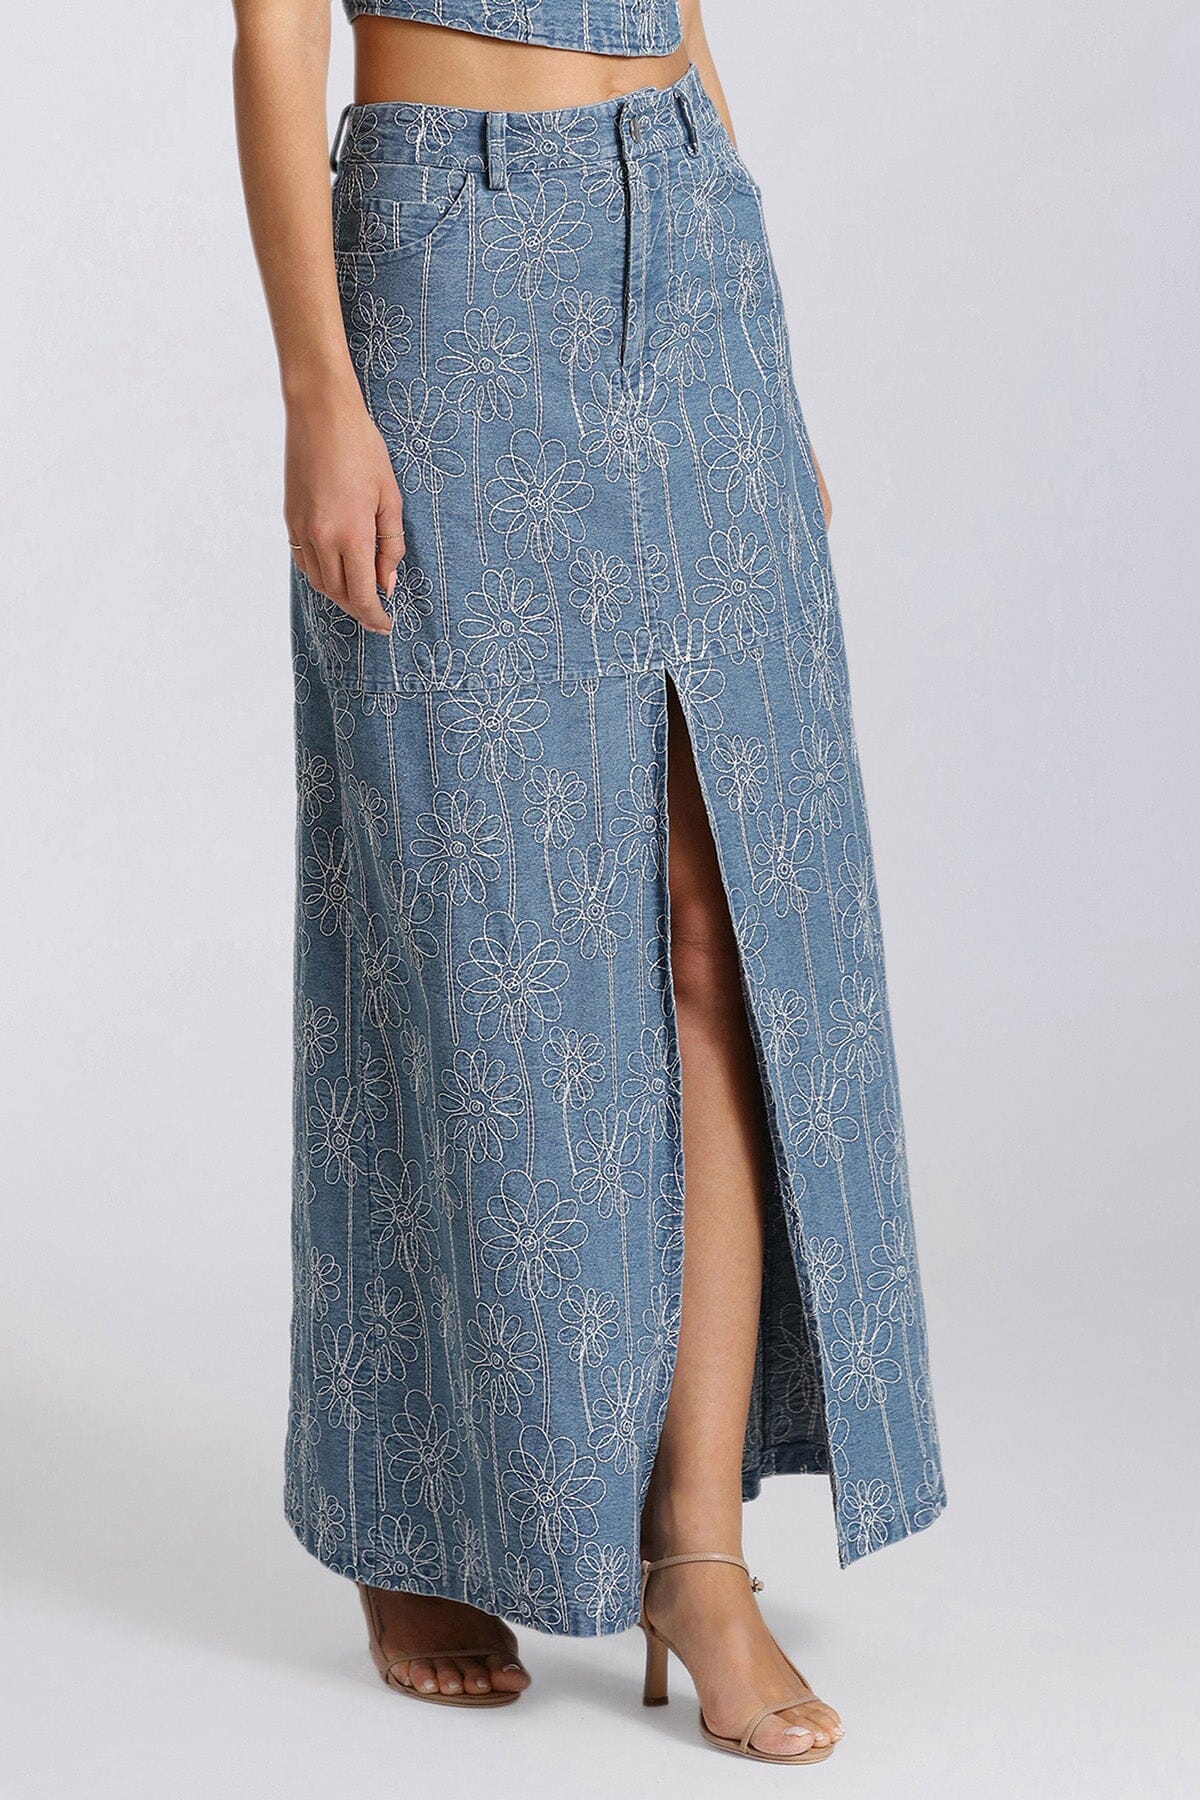 Light blue embroidered denim long maxi skirt - figure flattering summer skirts for women's fashion trends by Avec Les Filles